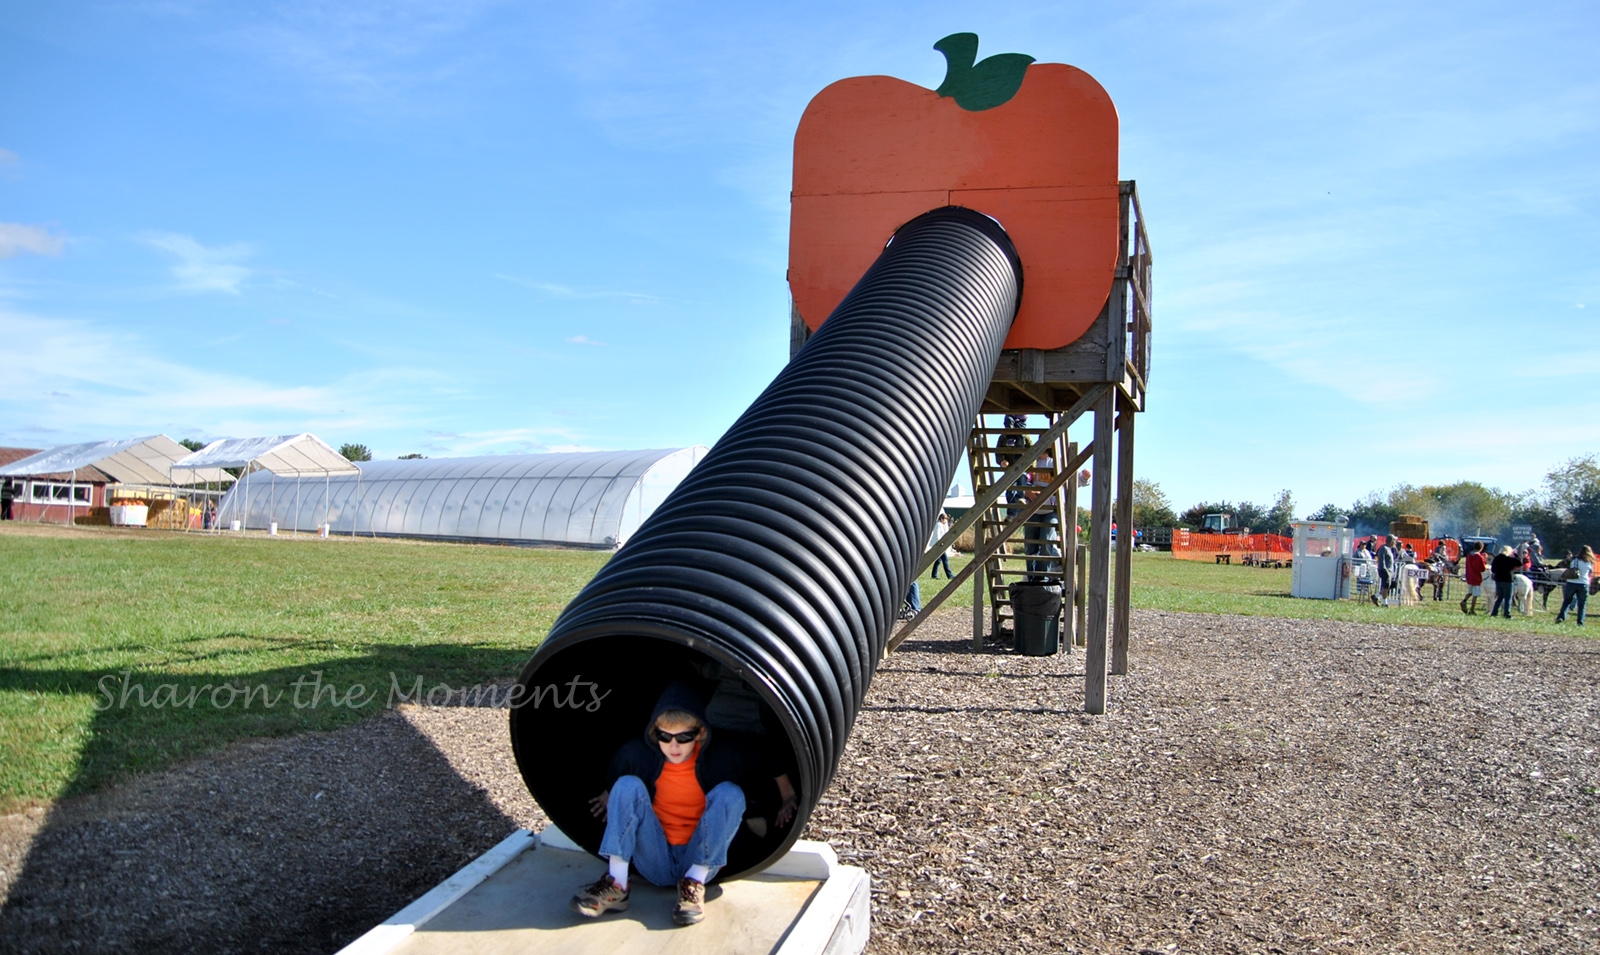 Pumpkin Patch Visit To Hidden Creek Farms|Sharon the Moments Blog